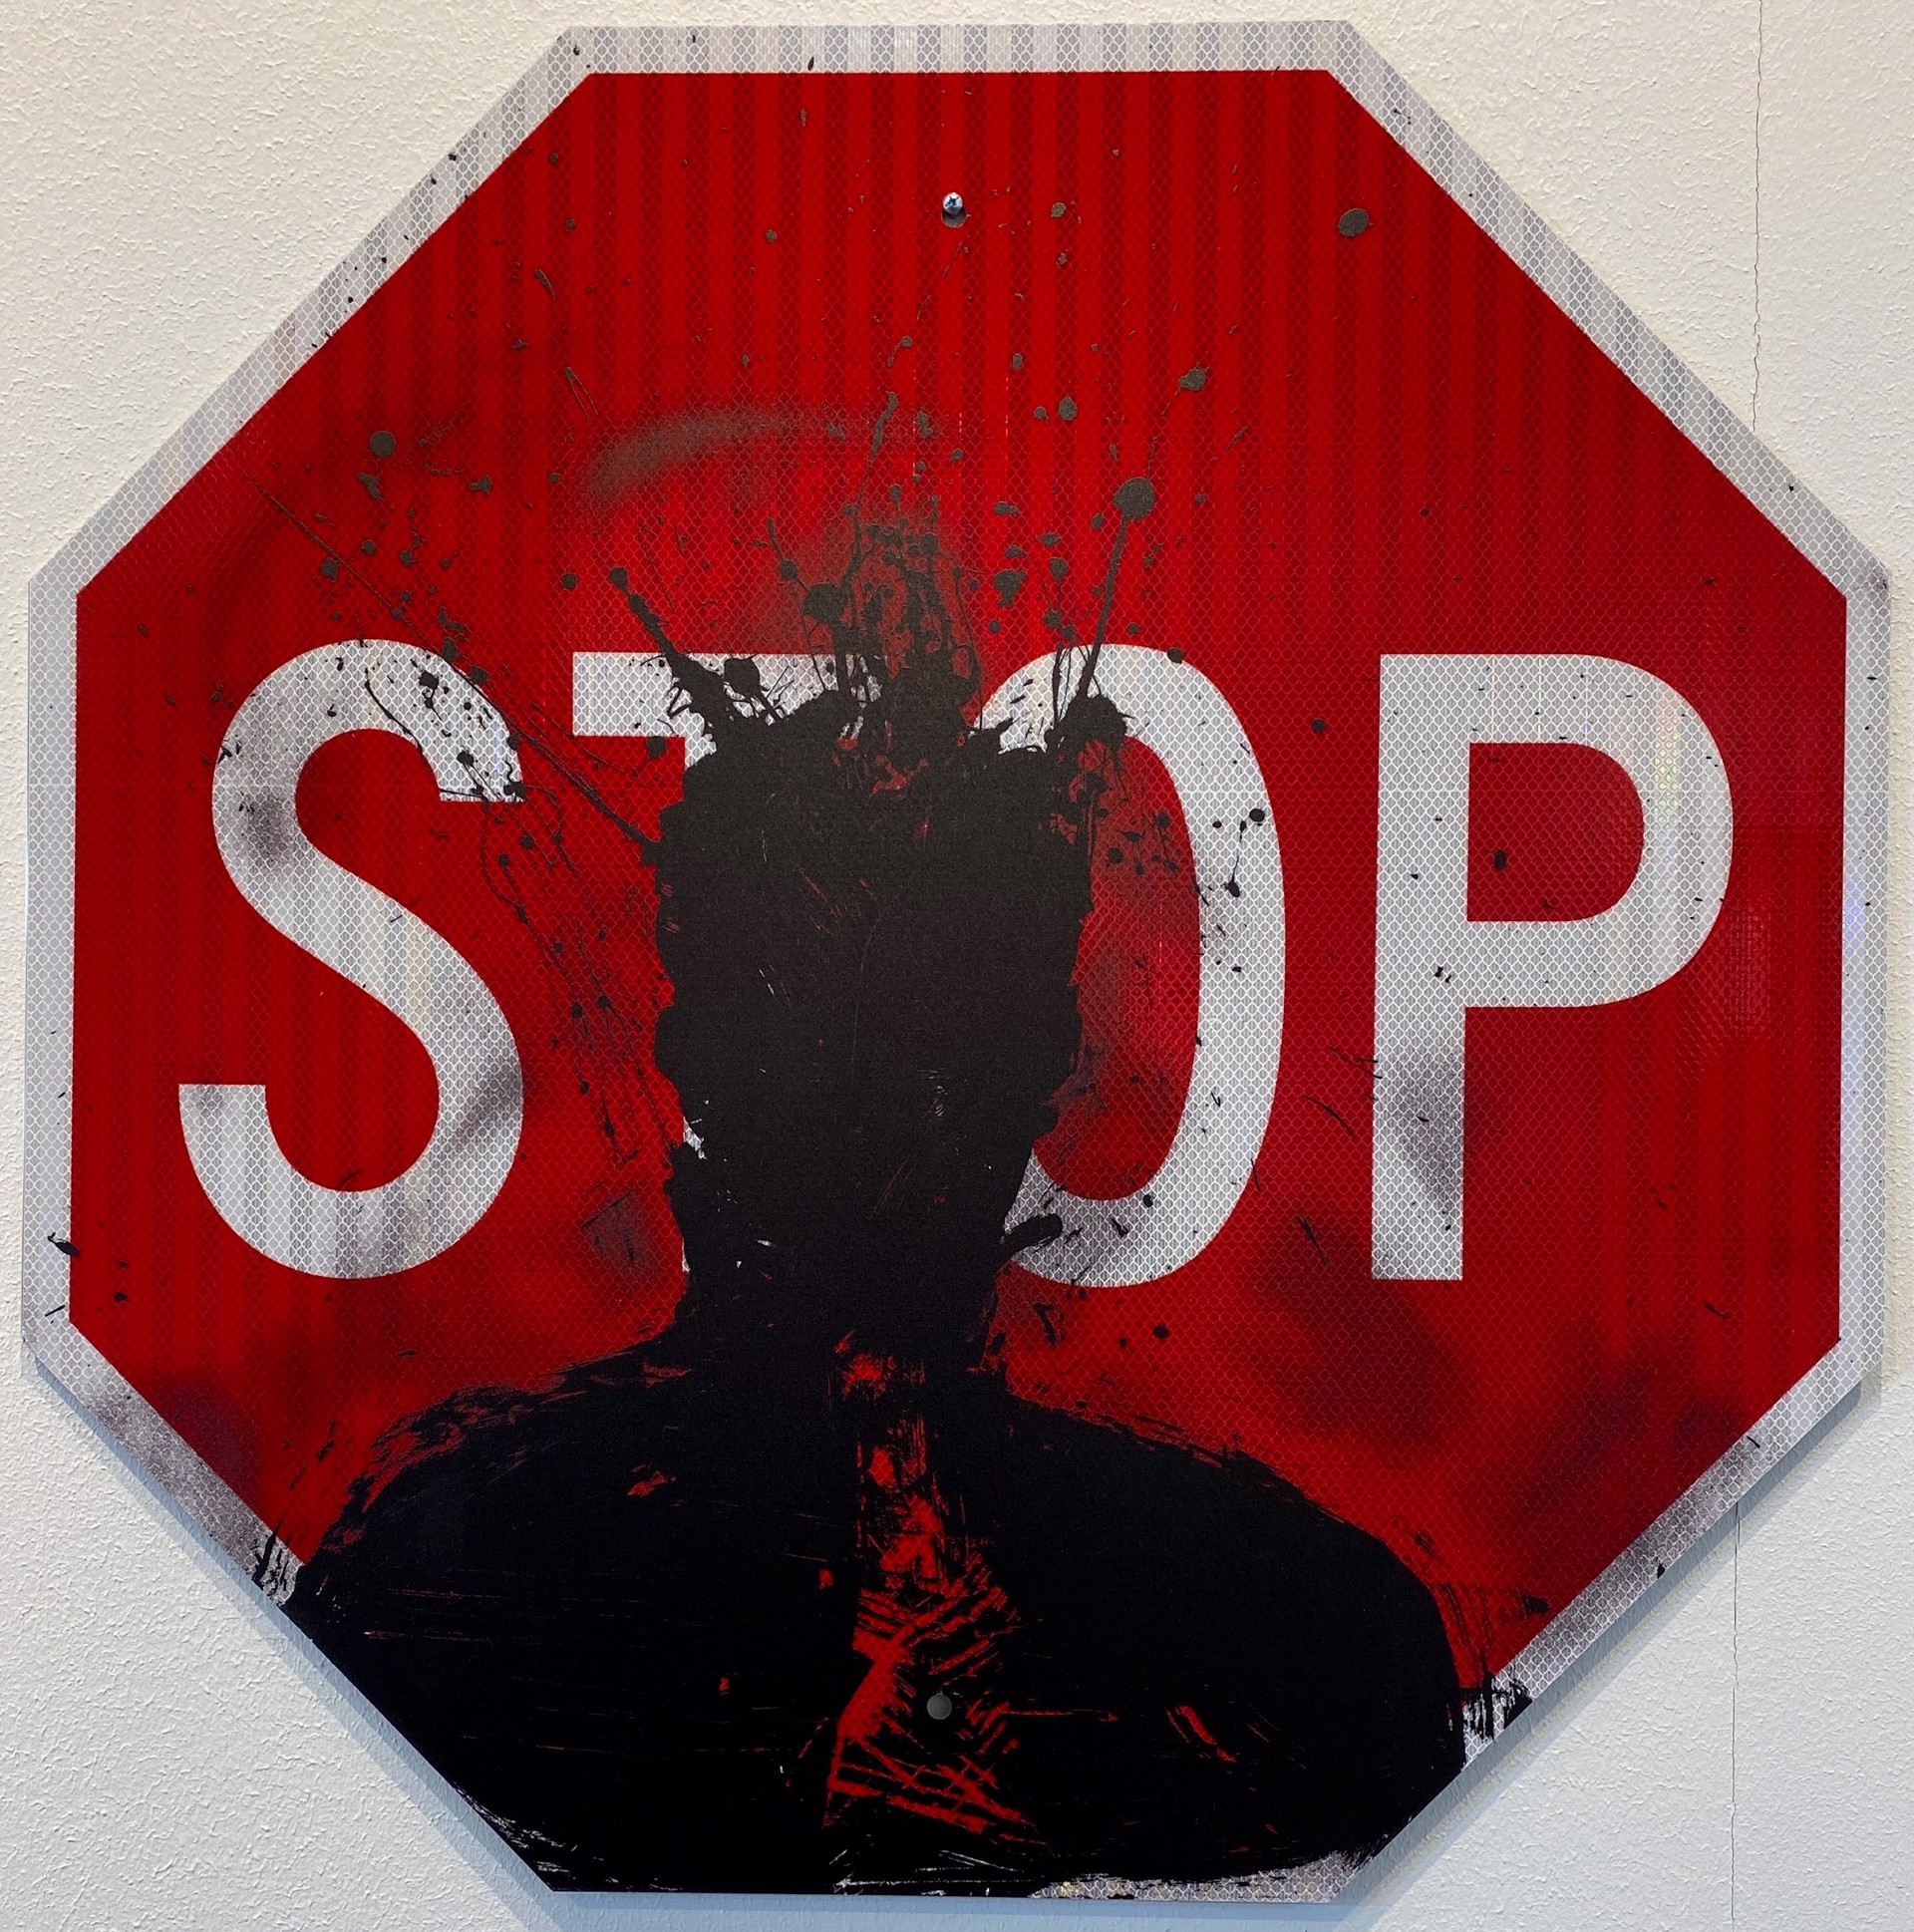 Stop Sign Print by Richard Hambleton